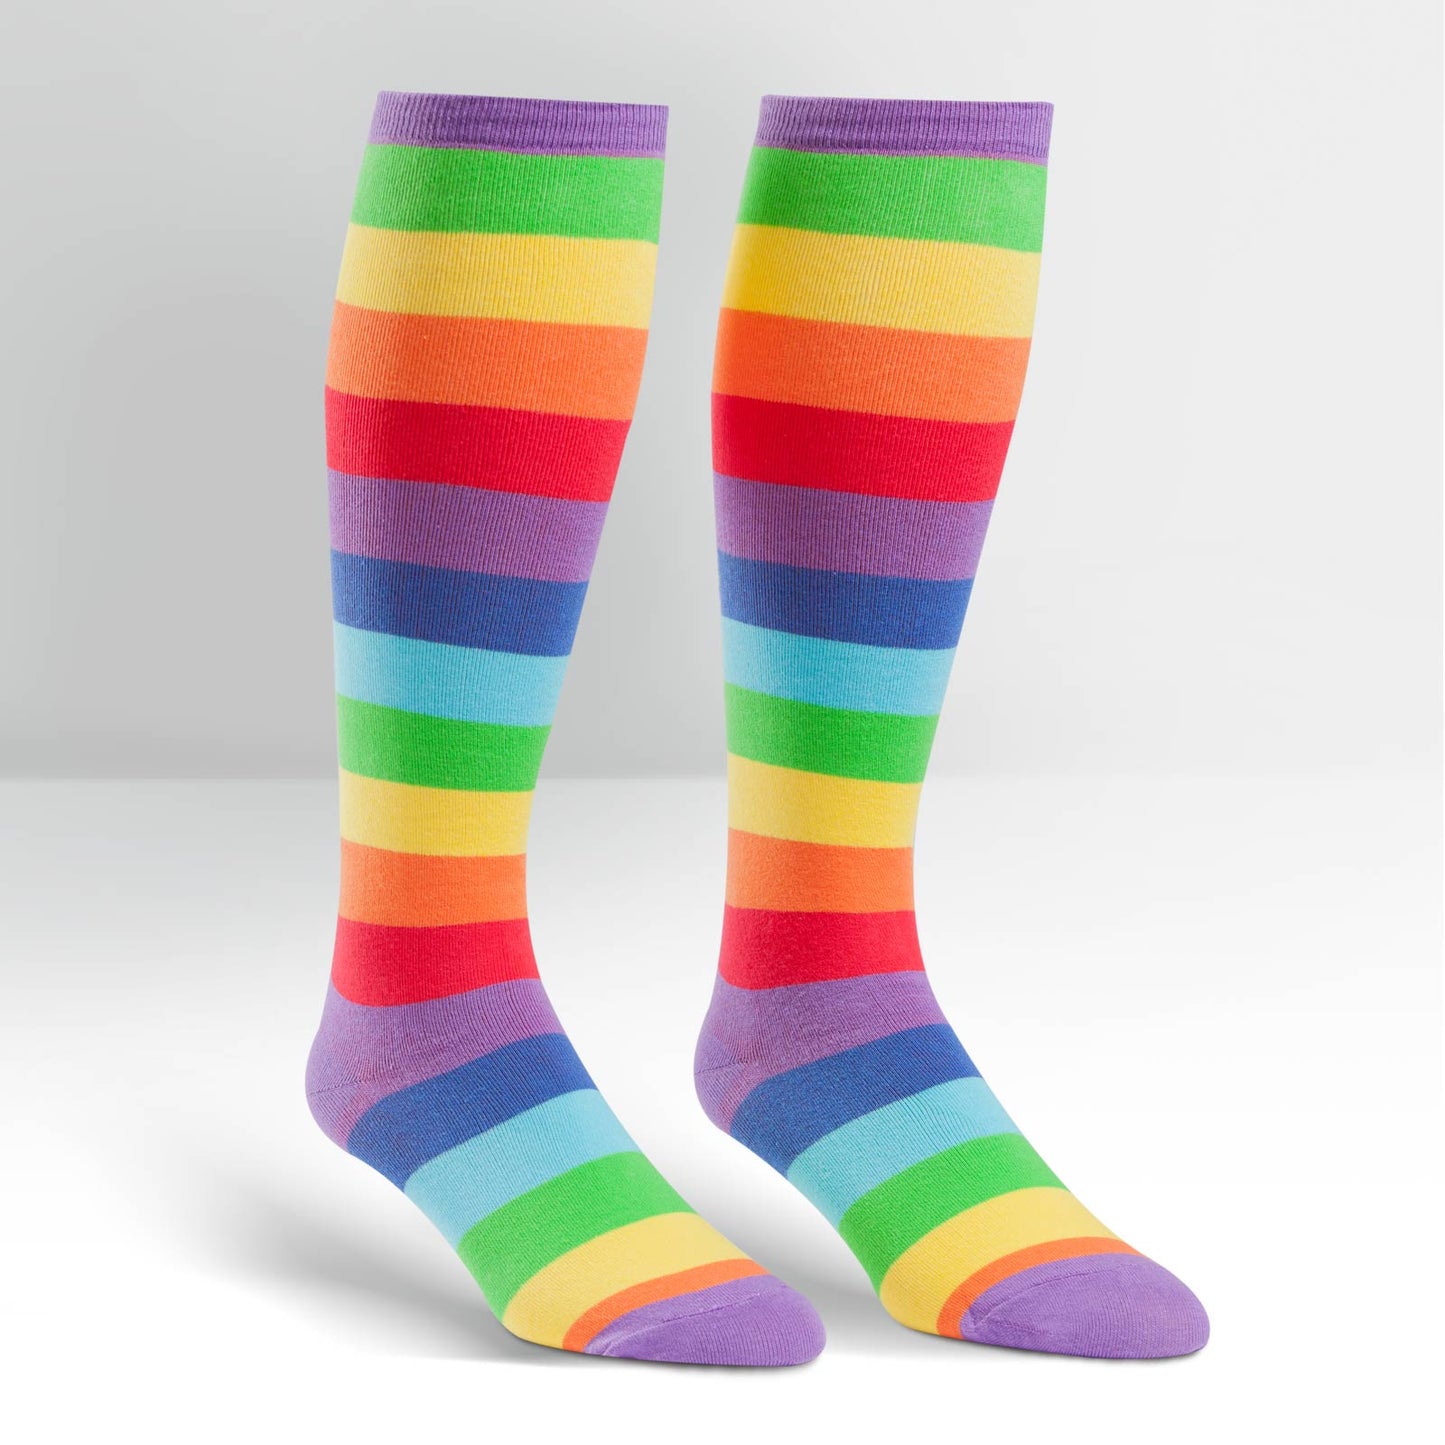 Sock it to Me Rainbow Power Gift Box Set styles: Unicorn V Narwhal, Super Juicy, Rainbow Blast Knee High